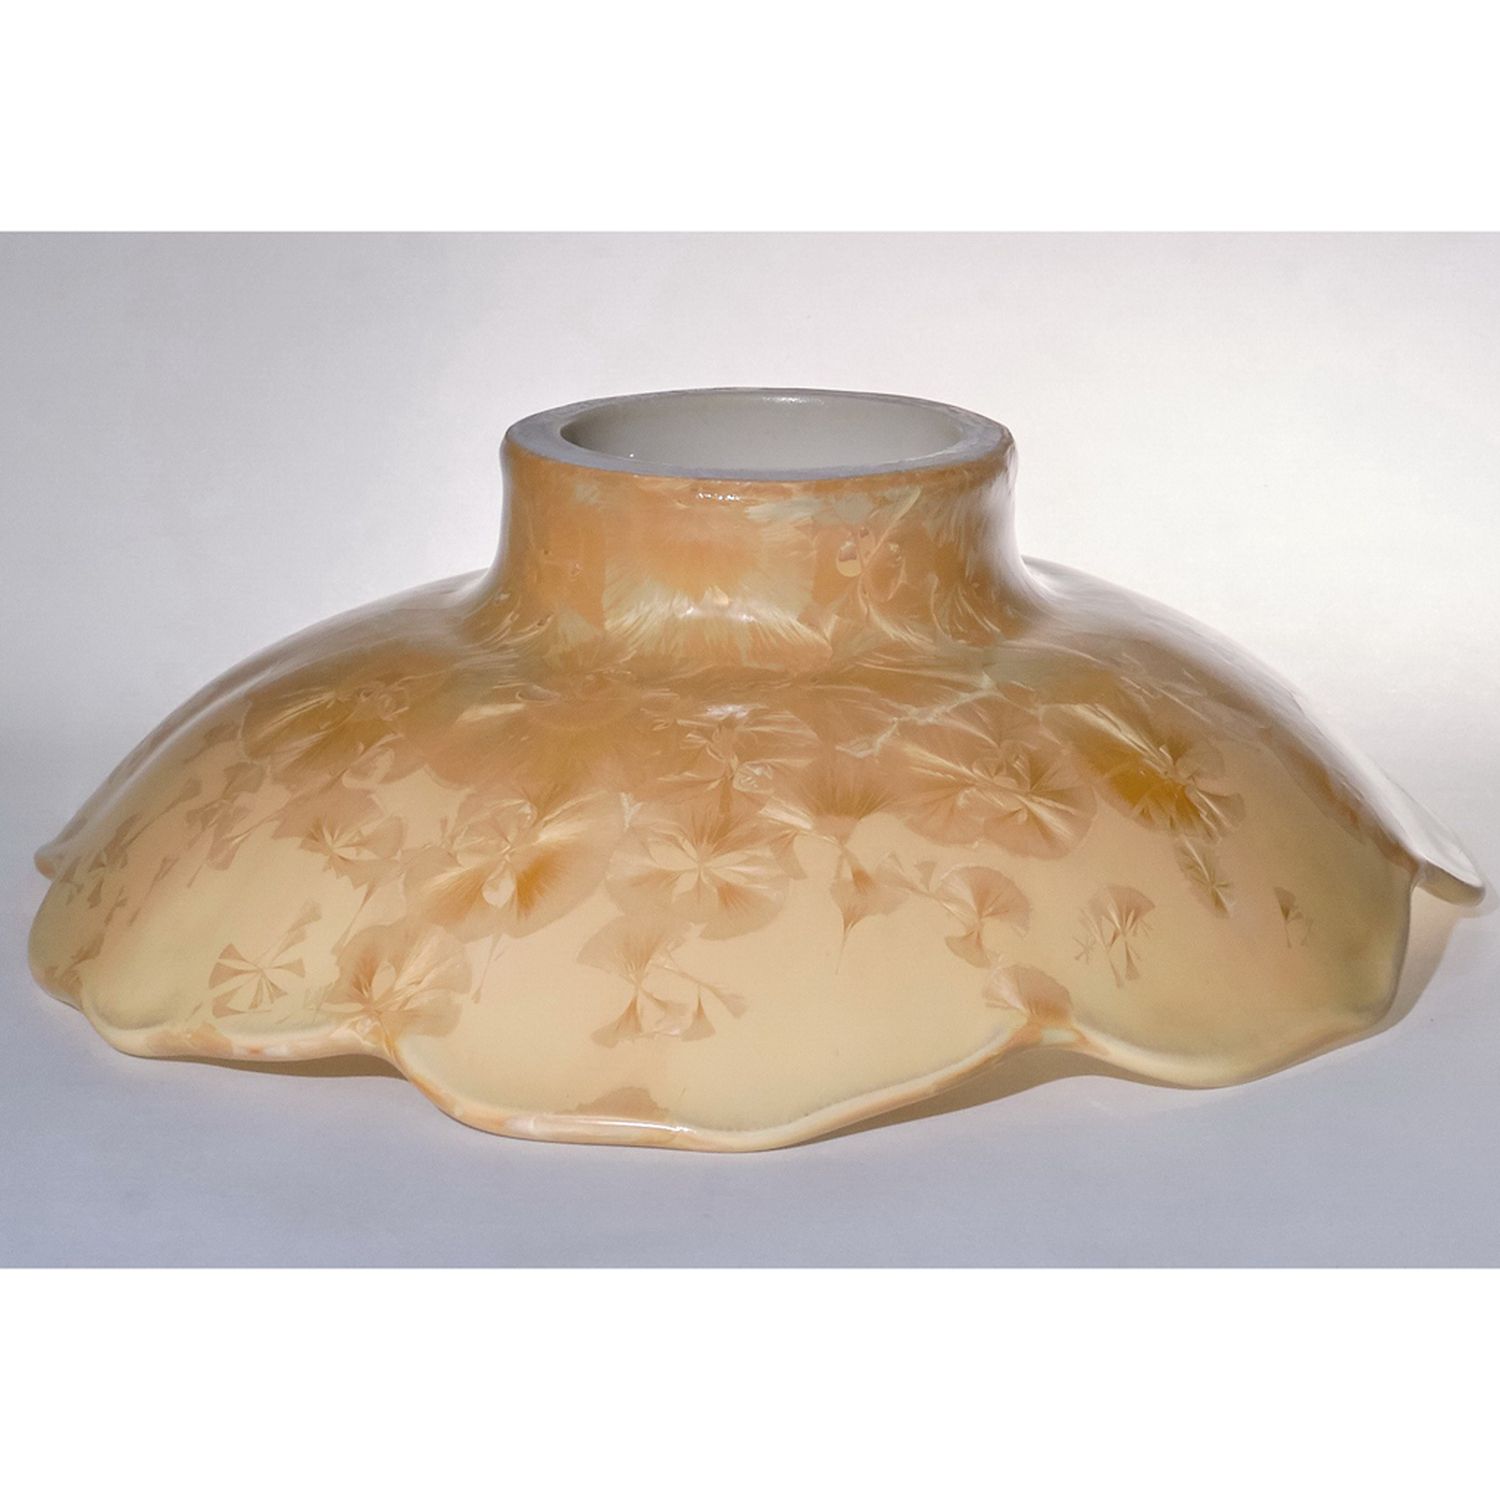 Yumiko Katsuya: Floral Cream Bowl Product Image 2 of 2